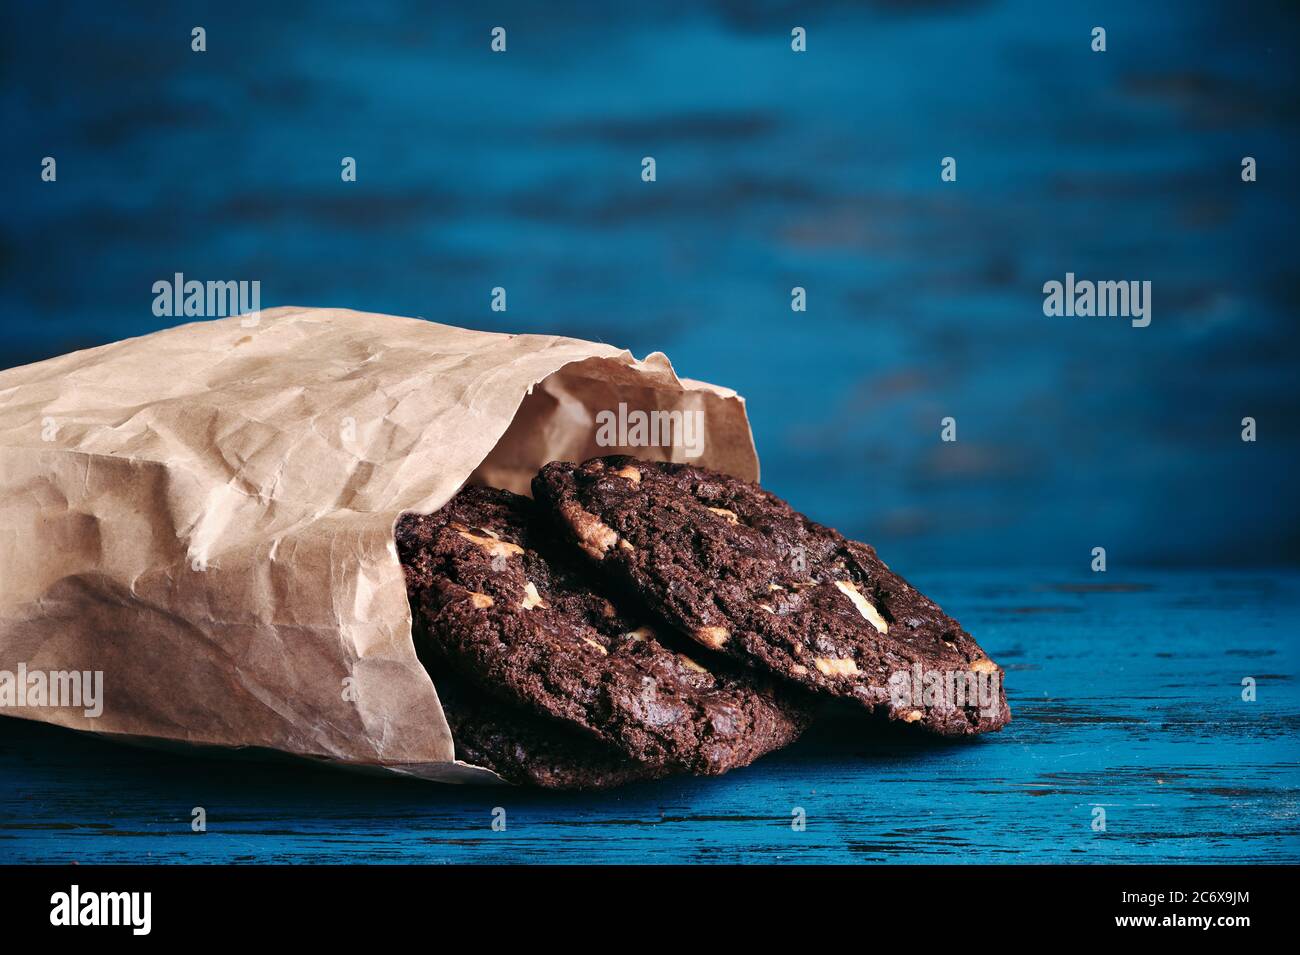 Chokolate cookies on blue wooden background. Stock Photo